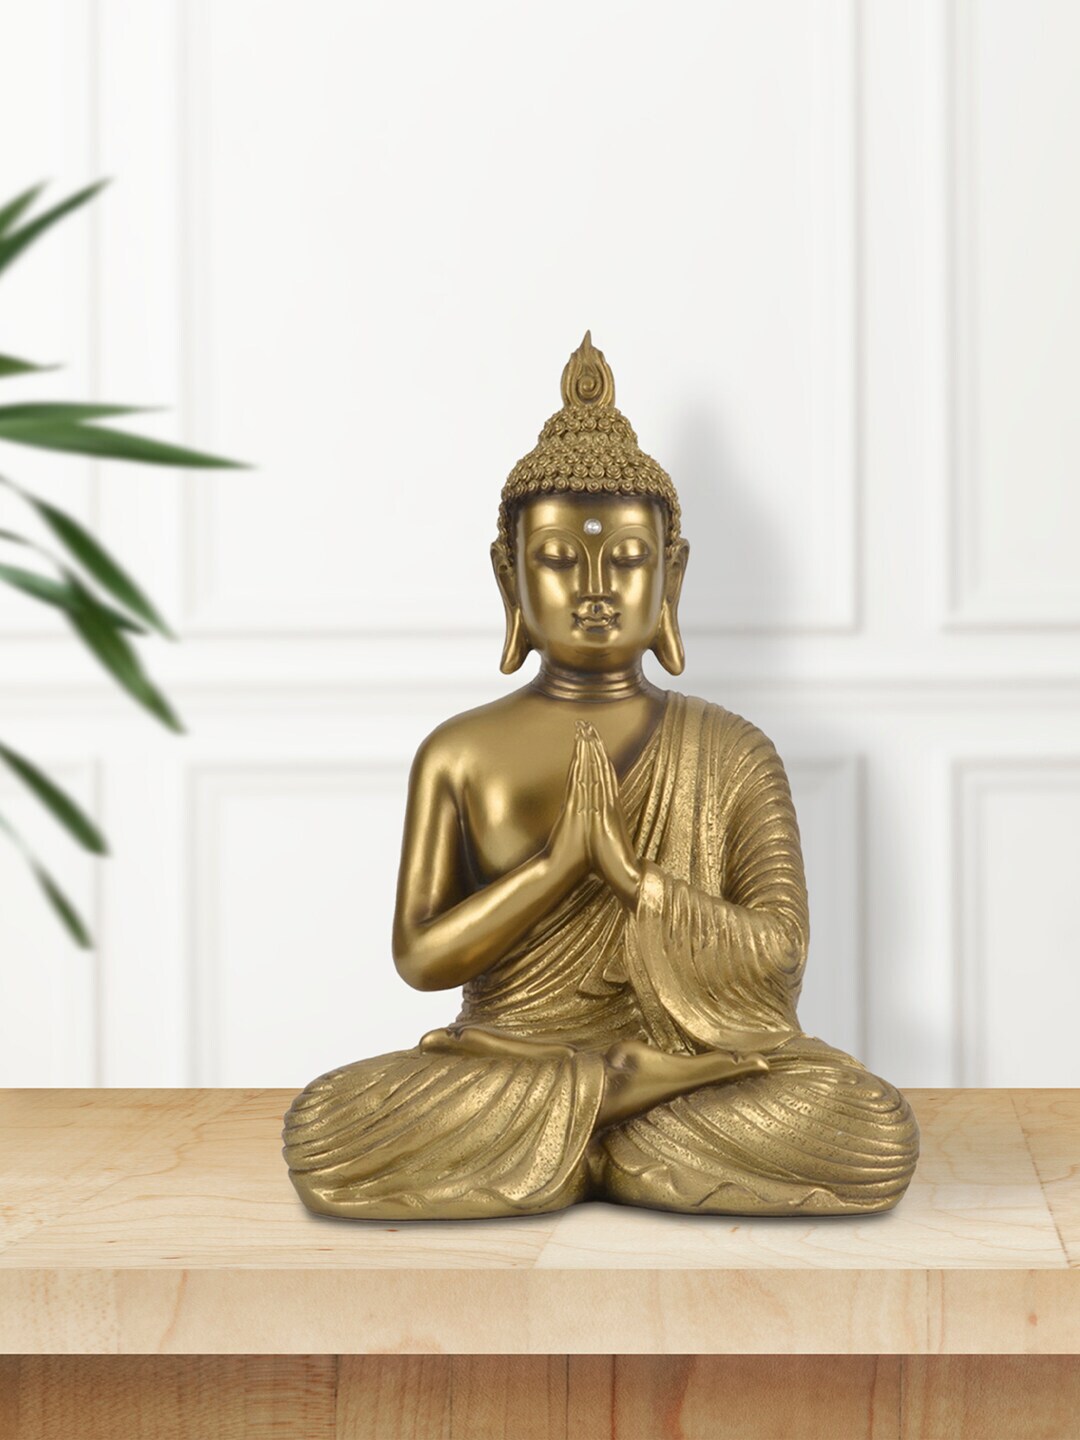 HomeTown Gold Praying Buddha Figurine Showpieces Price in India